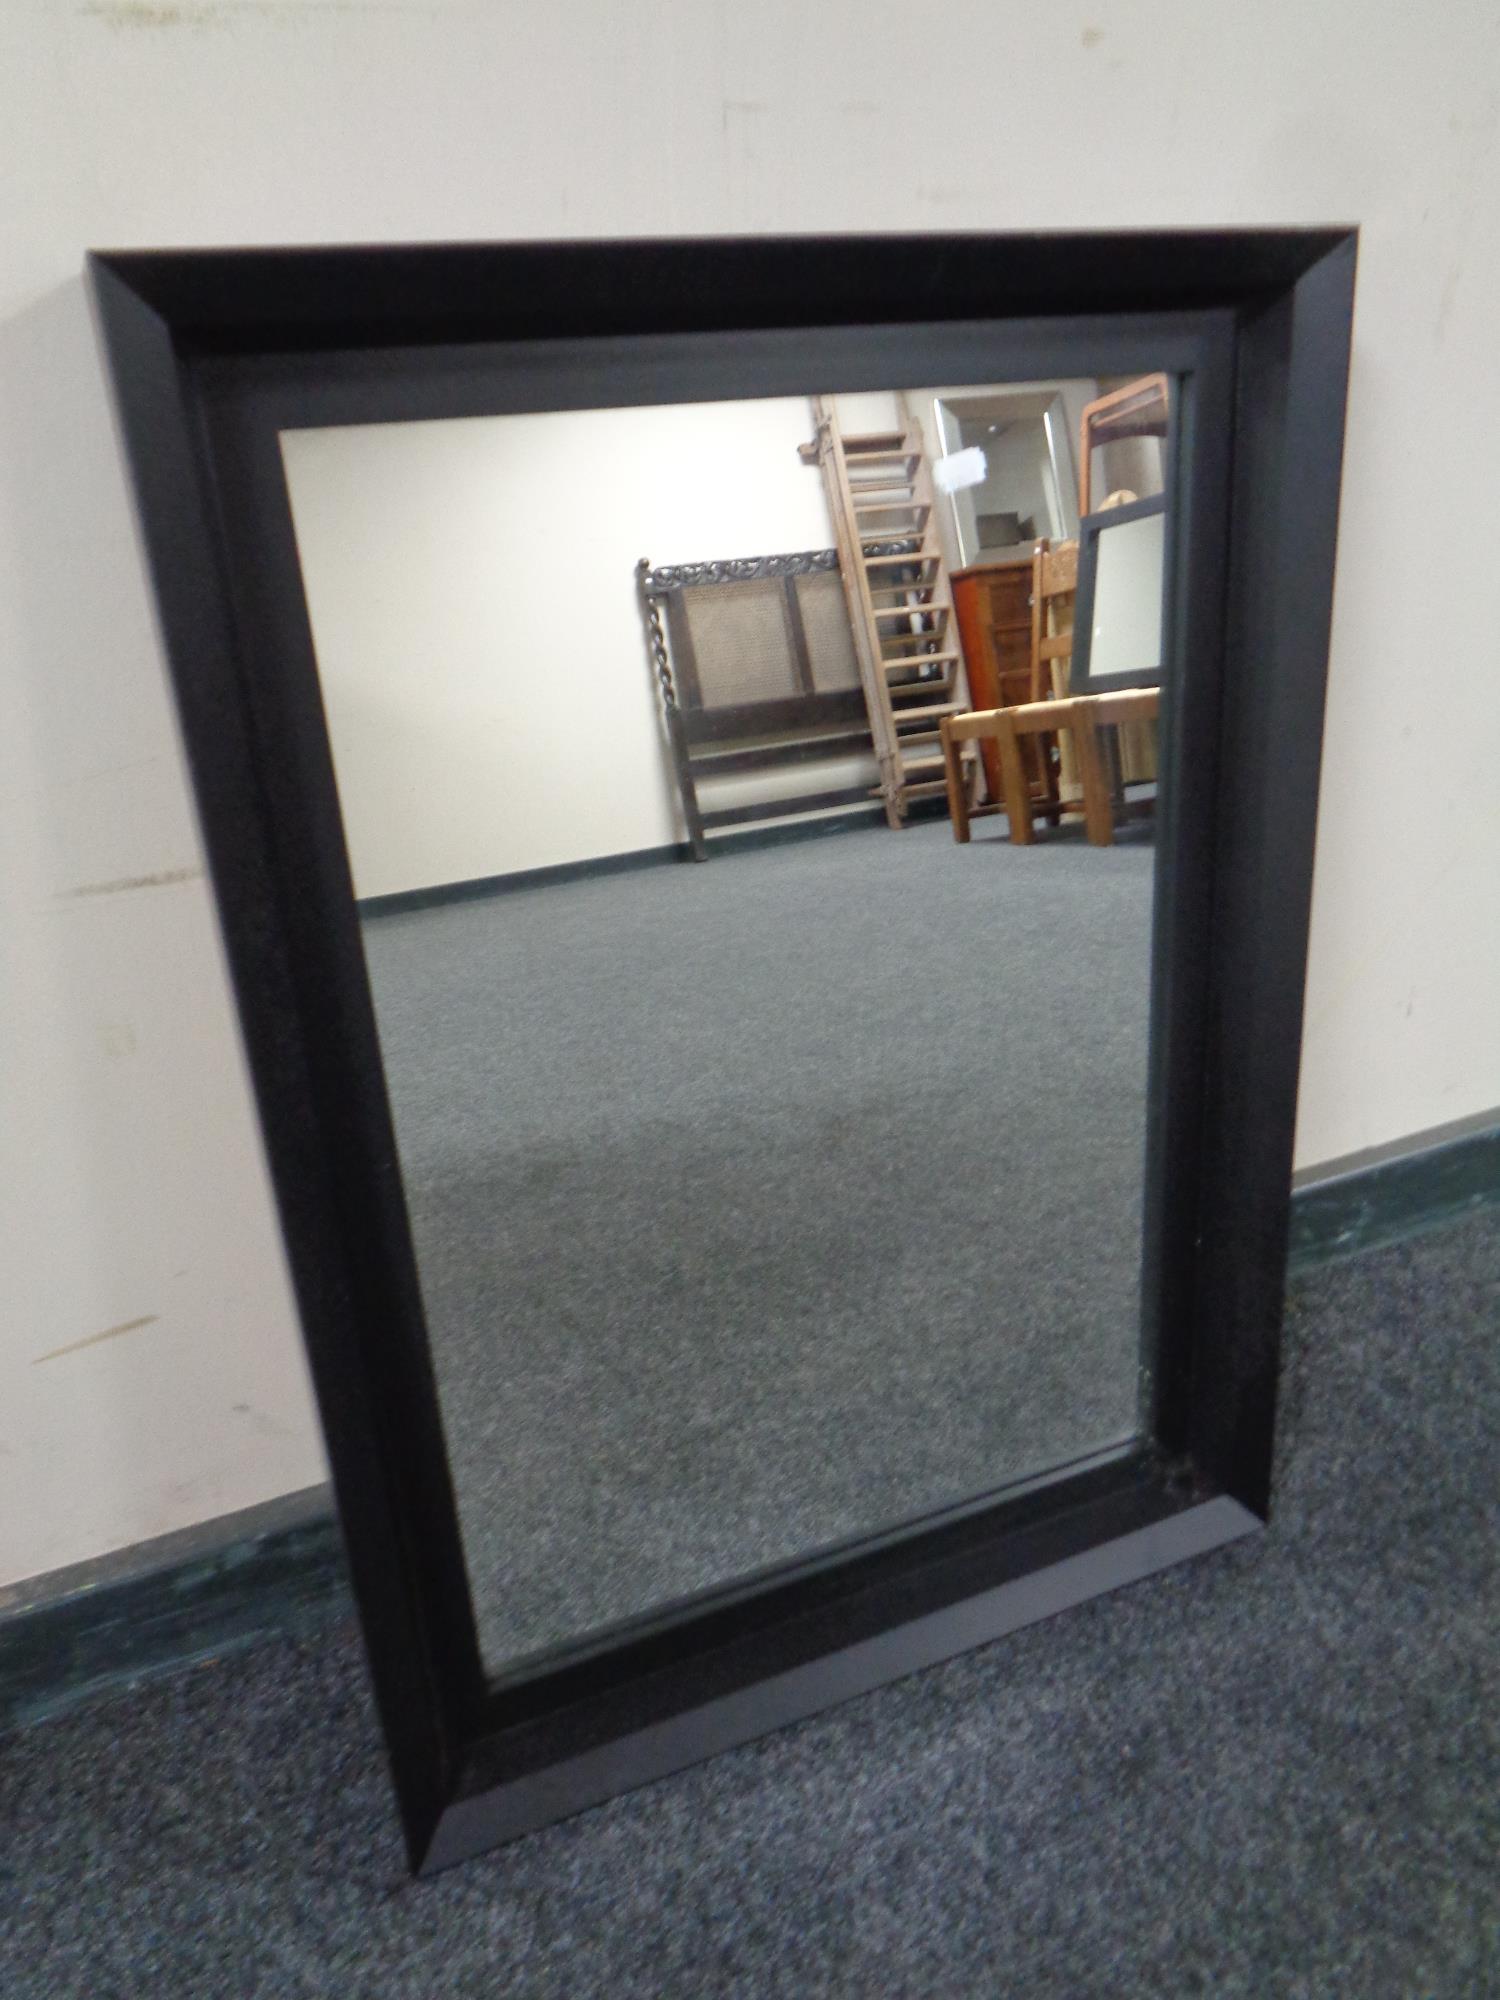 A contemporary black framed mirror